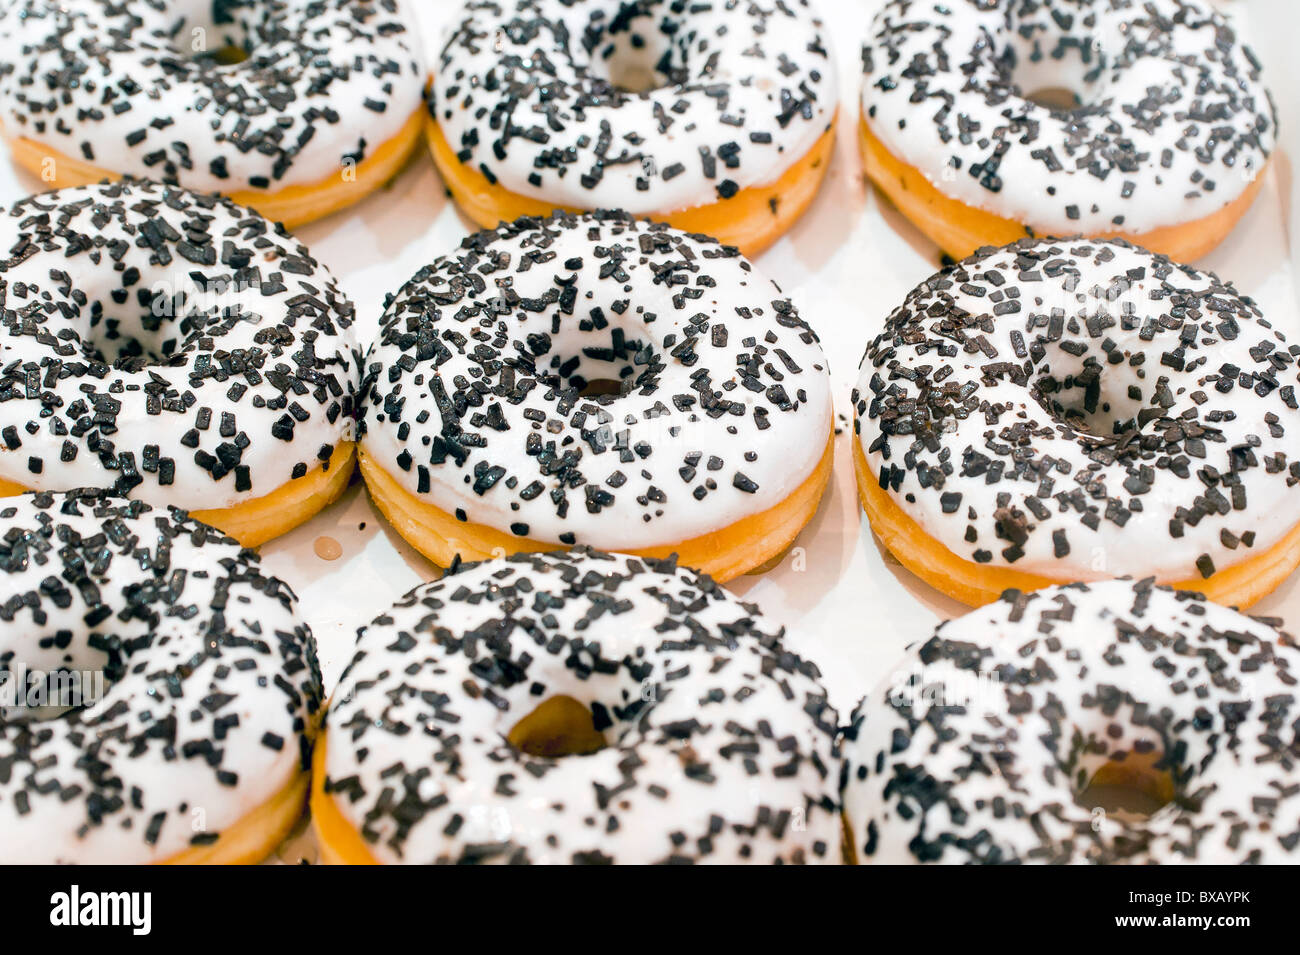 White glazed doughnuts with chocolate sprinkles Stock Photo